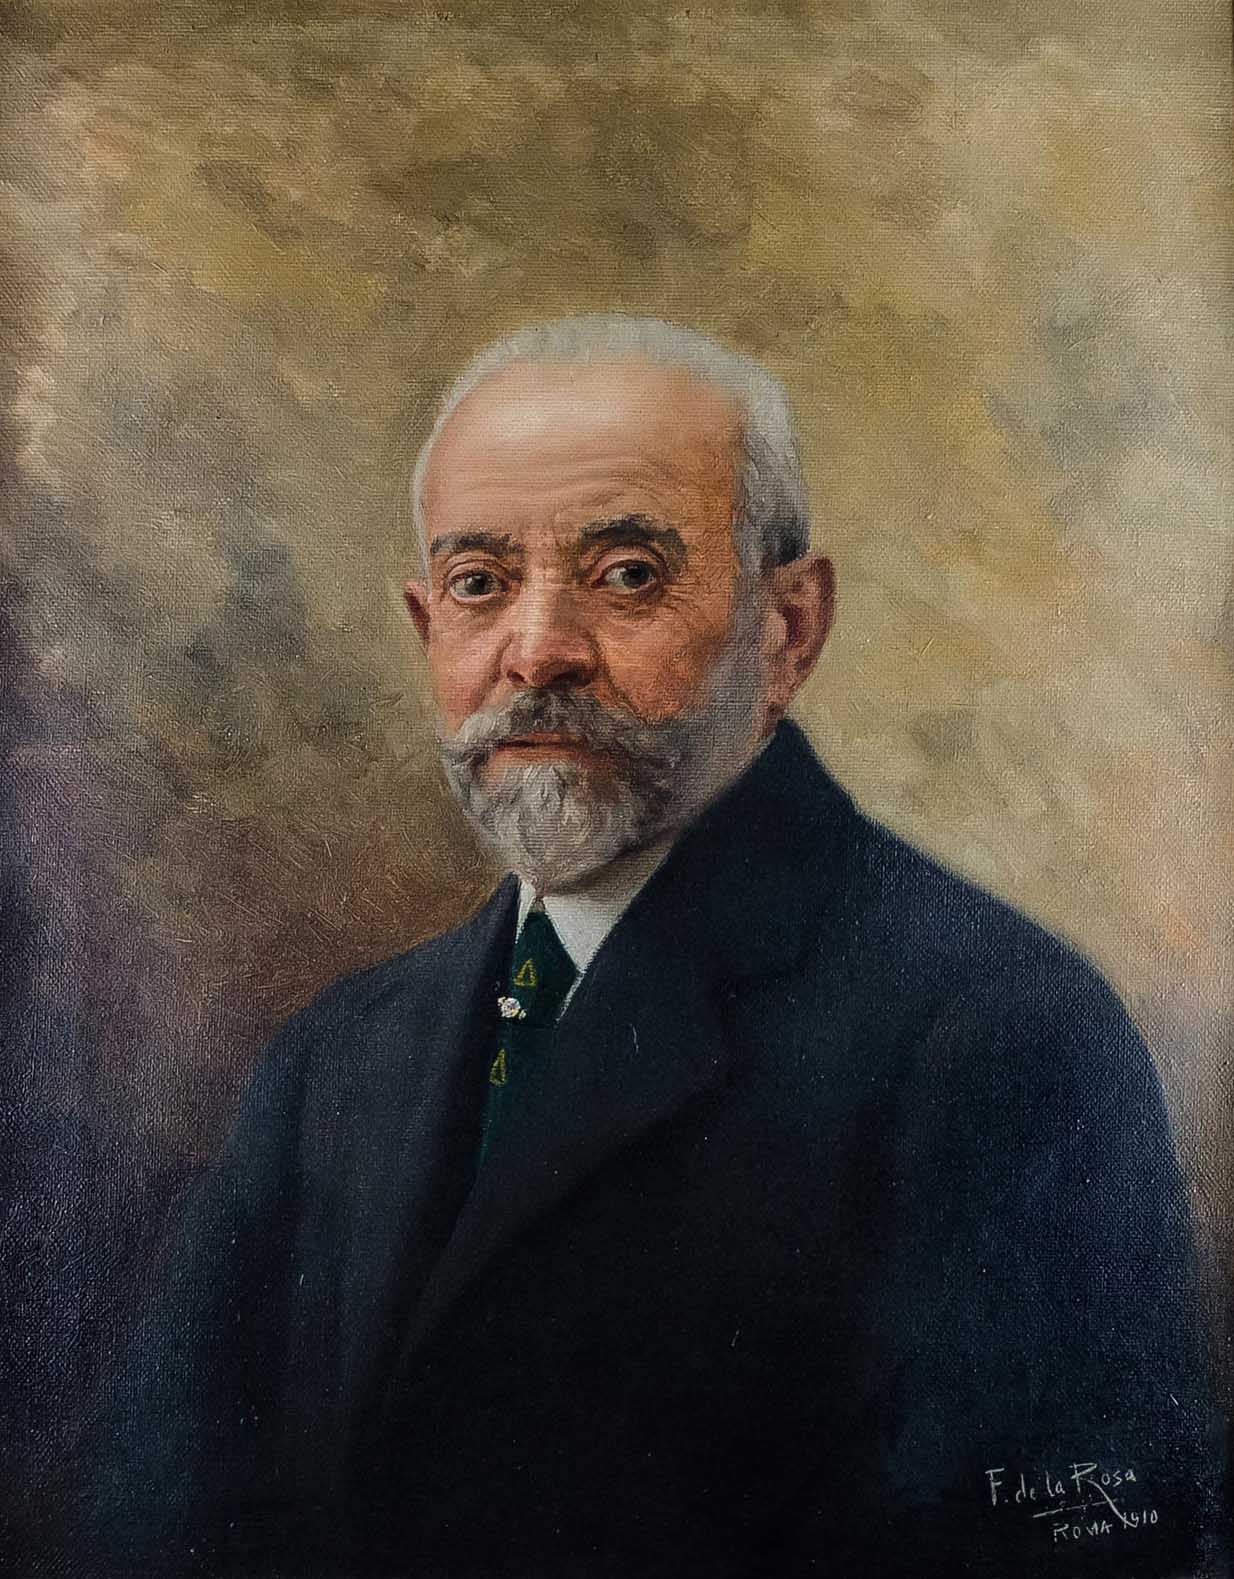 Fabián de la Rosa, Retrato masculino, 1910. Salida: 3.000 euros. Remate: 7.500 euros